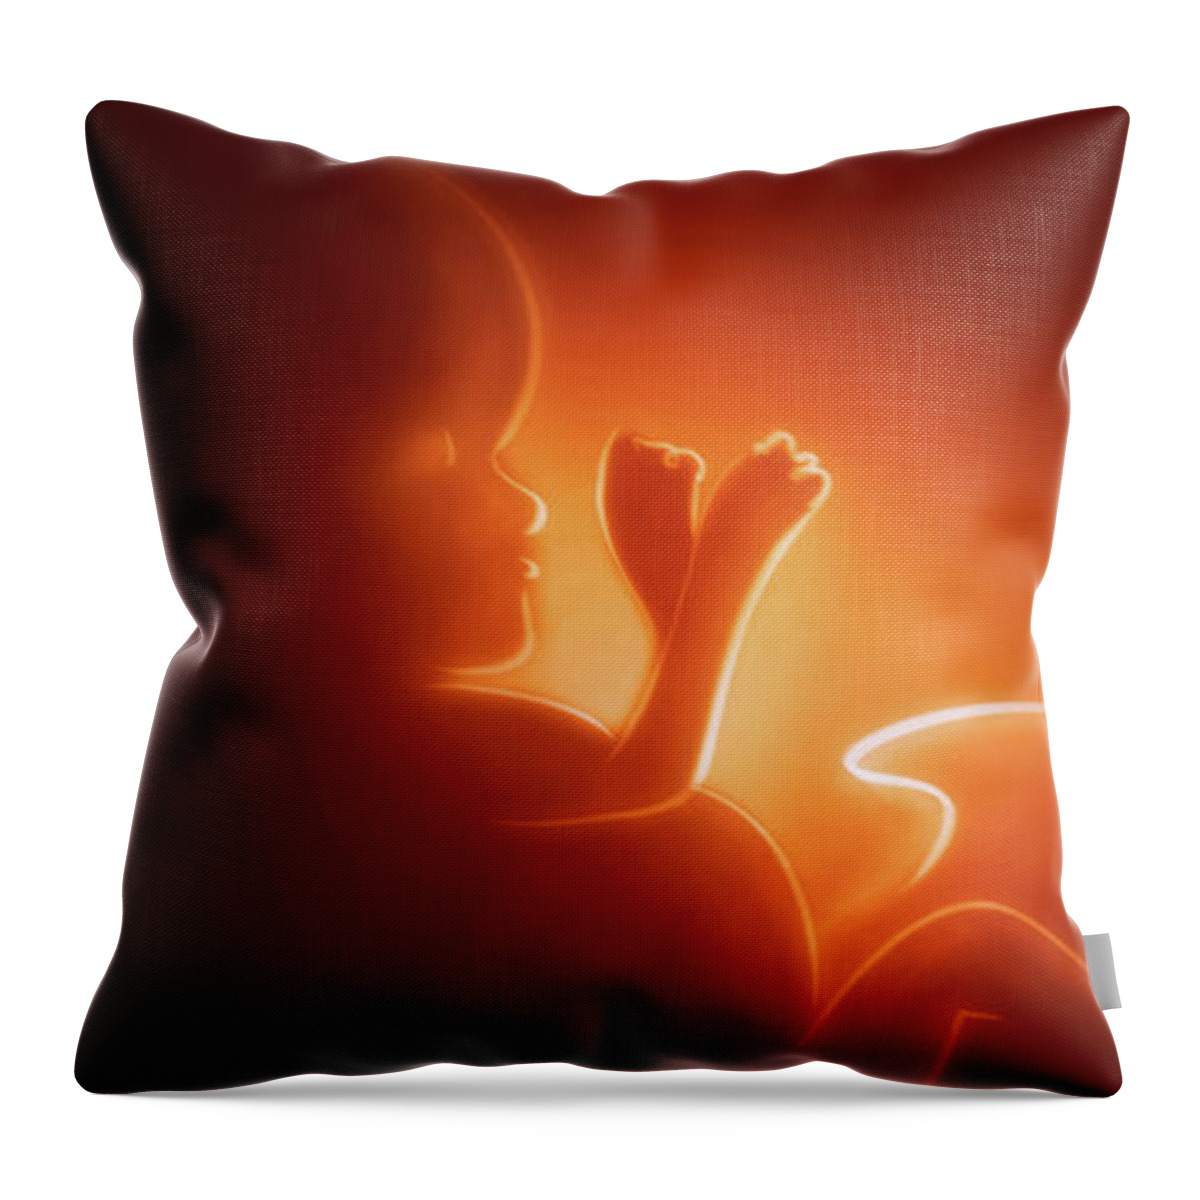 Baby Throw Pillow featuring the digital art Art - The Beat of Life by Matthias Zegveld